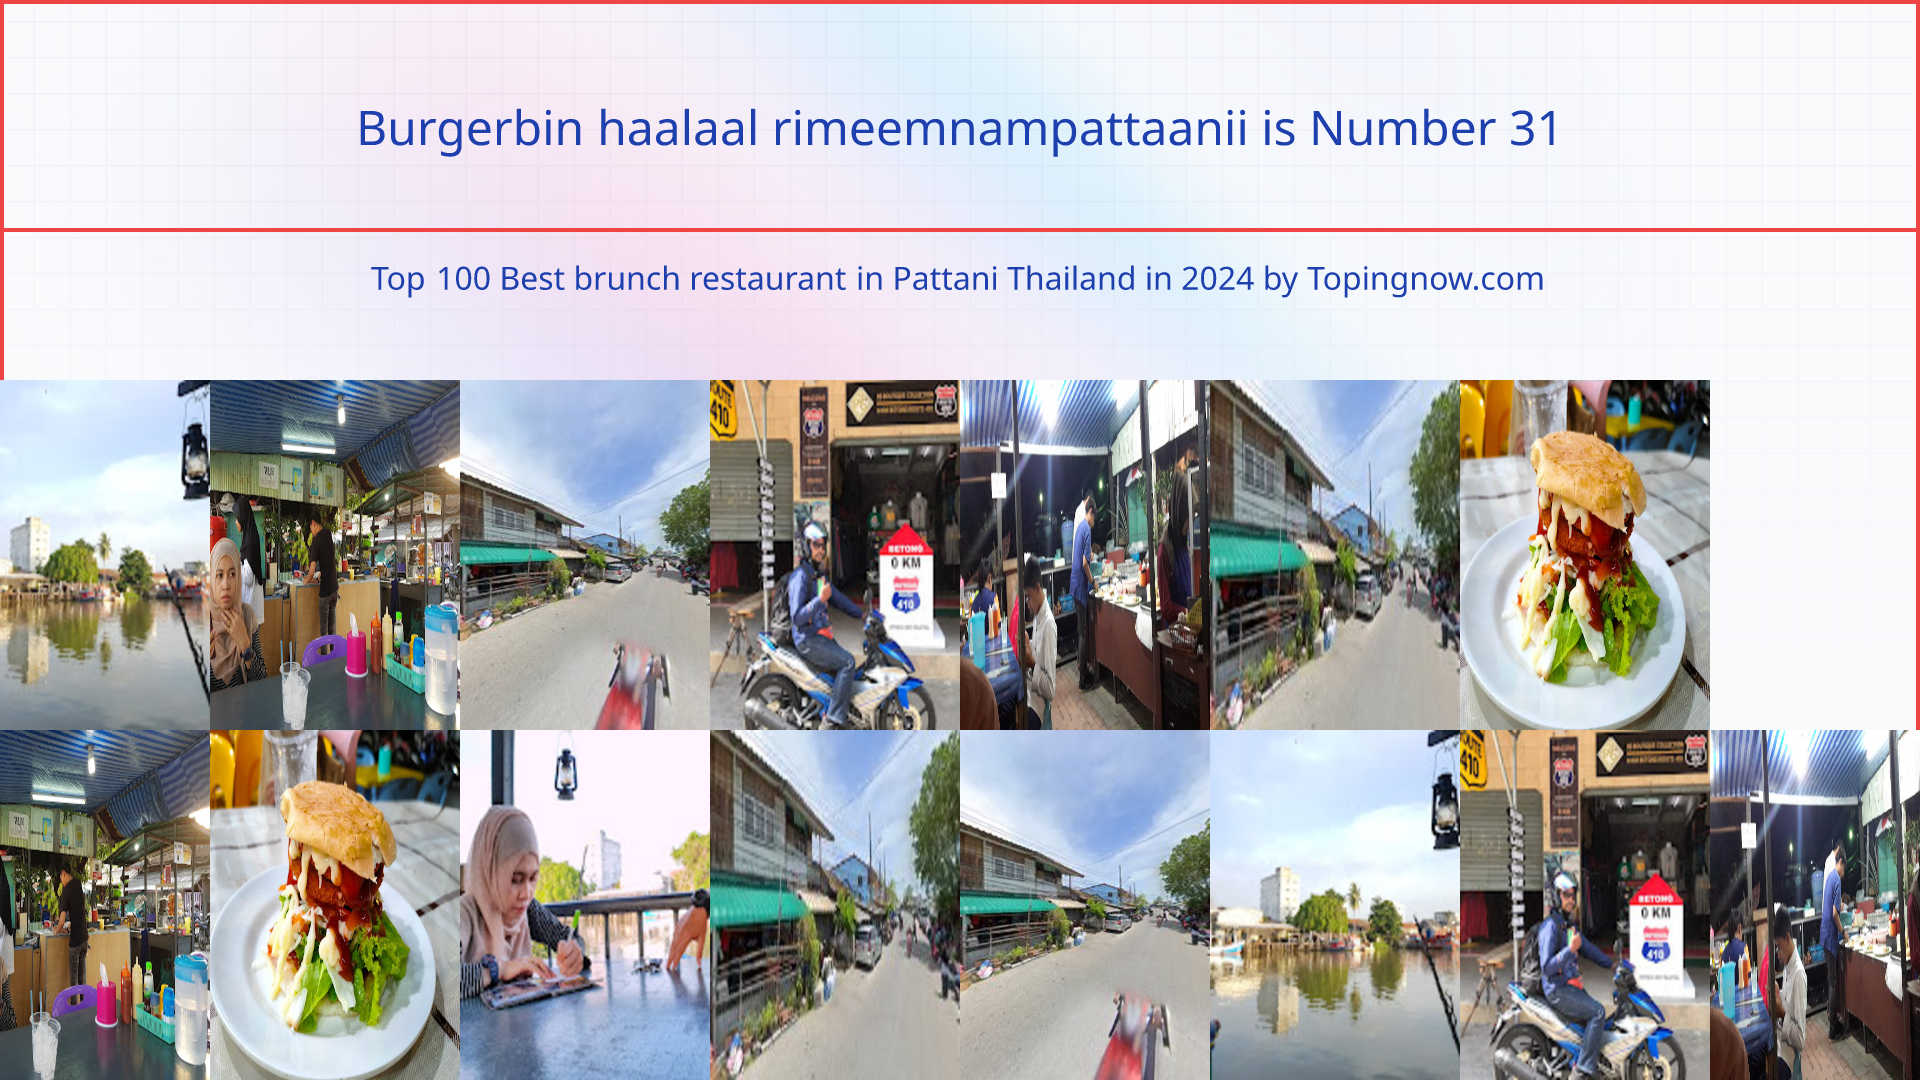 Burgerbin haalaal rimeemnampattaanii: Top 100 Best brunch restaurant in Pattani Thailand in 2024